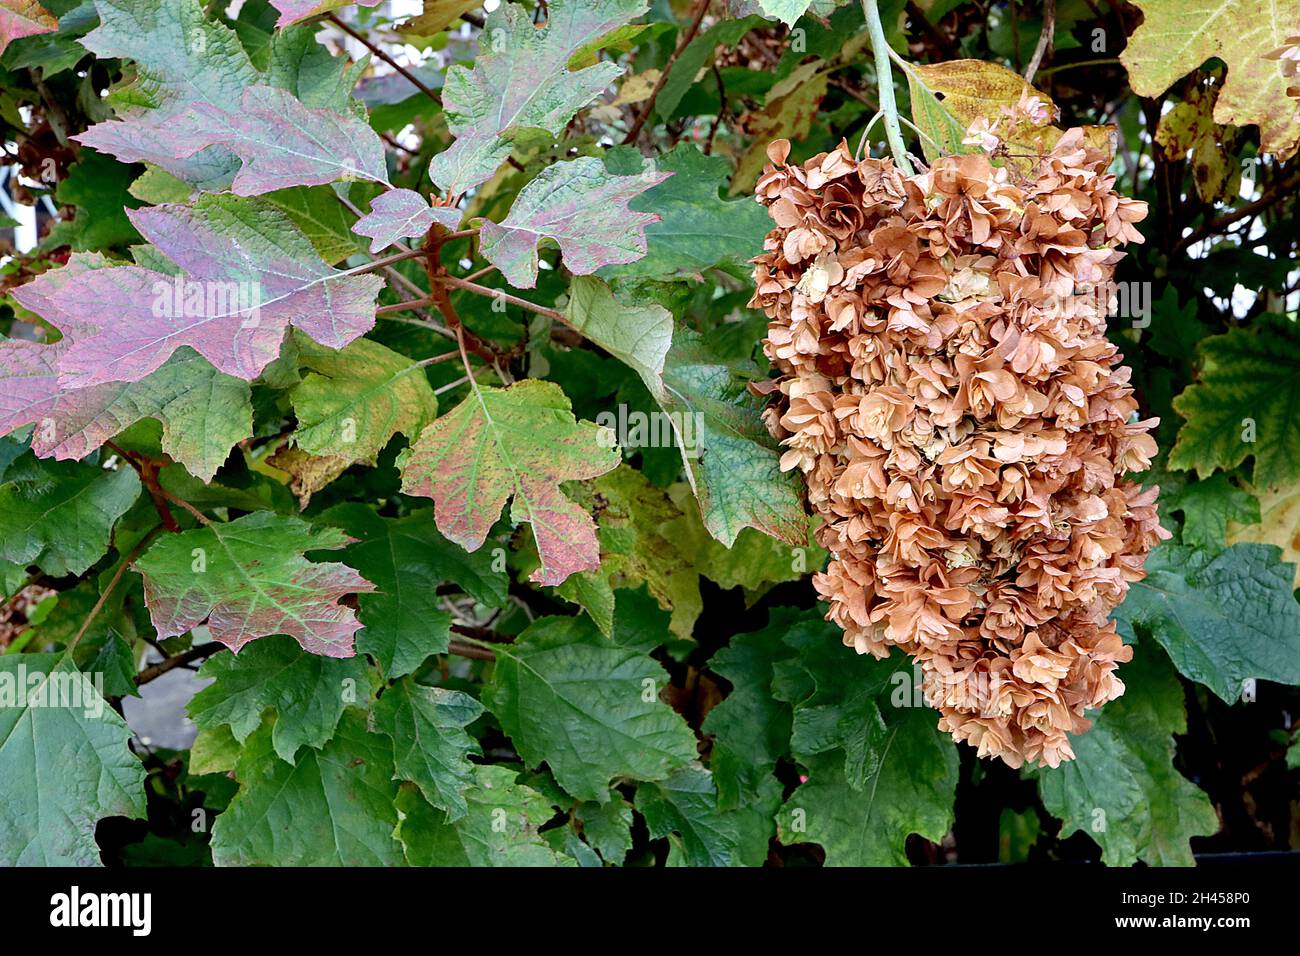 Hydrangea quercifolia ‘Snowflake’ oak-leaved hydrangea Snowflake - pendulous panicle of double white flowers and oakleaf-shaped leaves,  October, UK Stock Photo